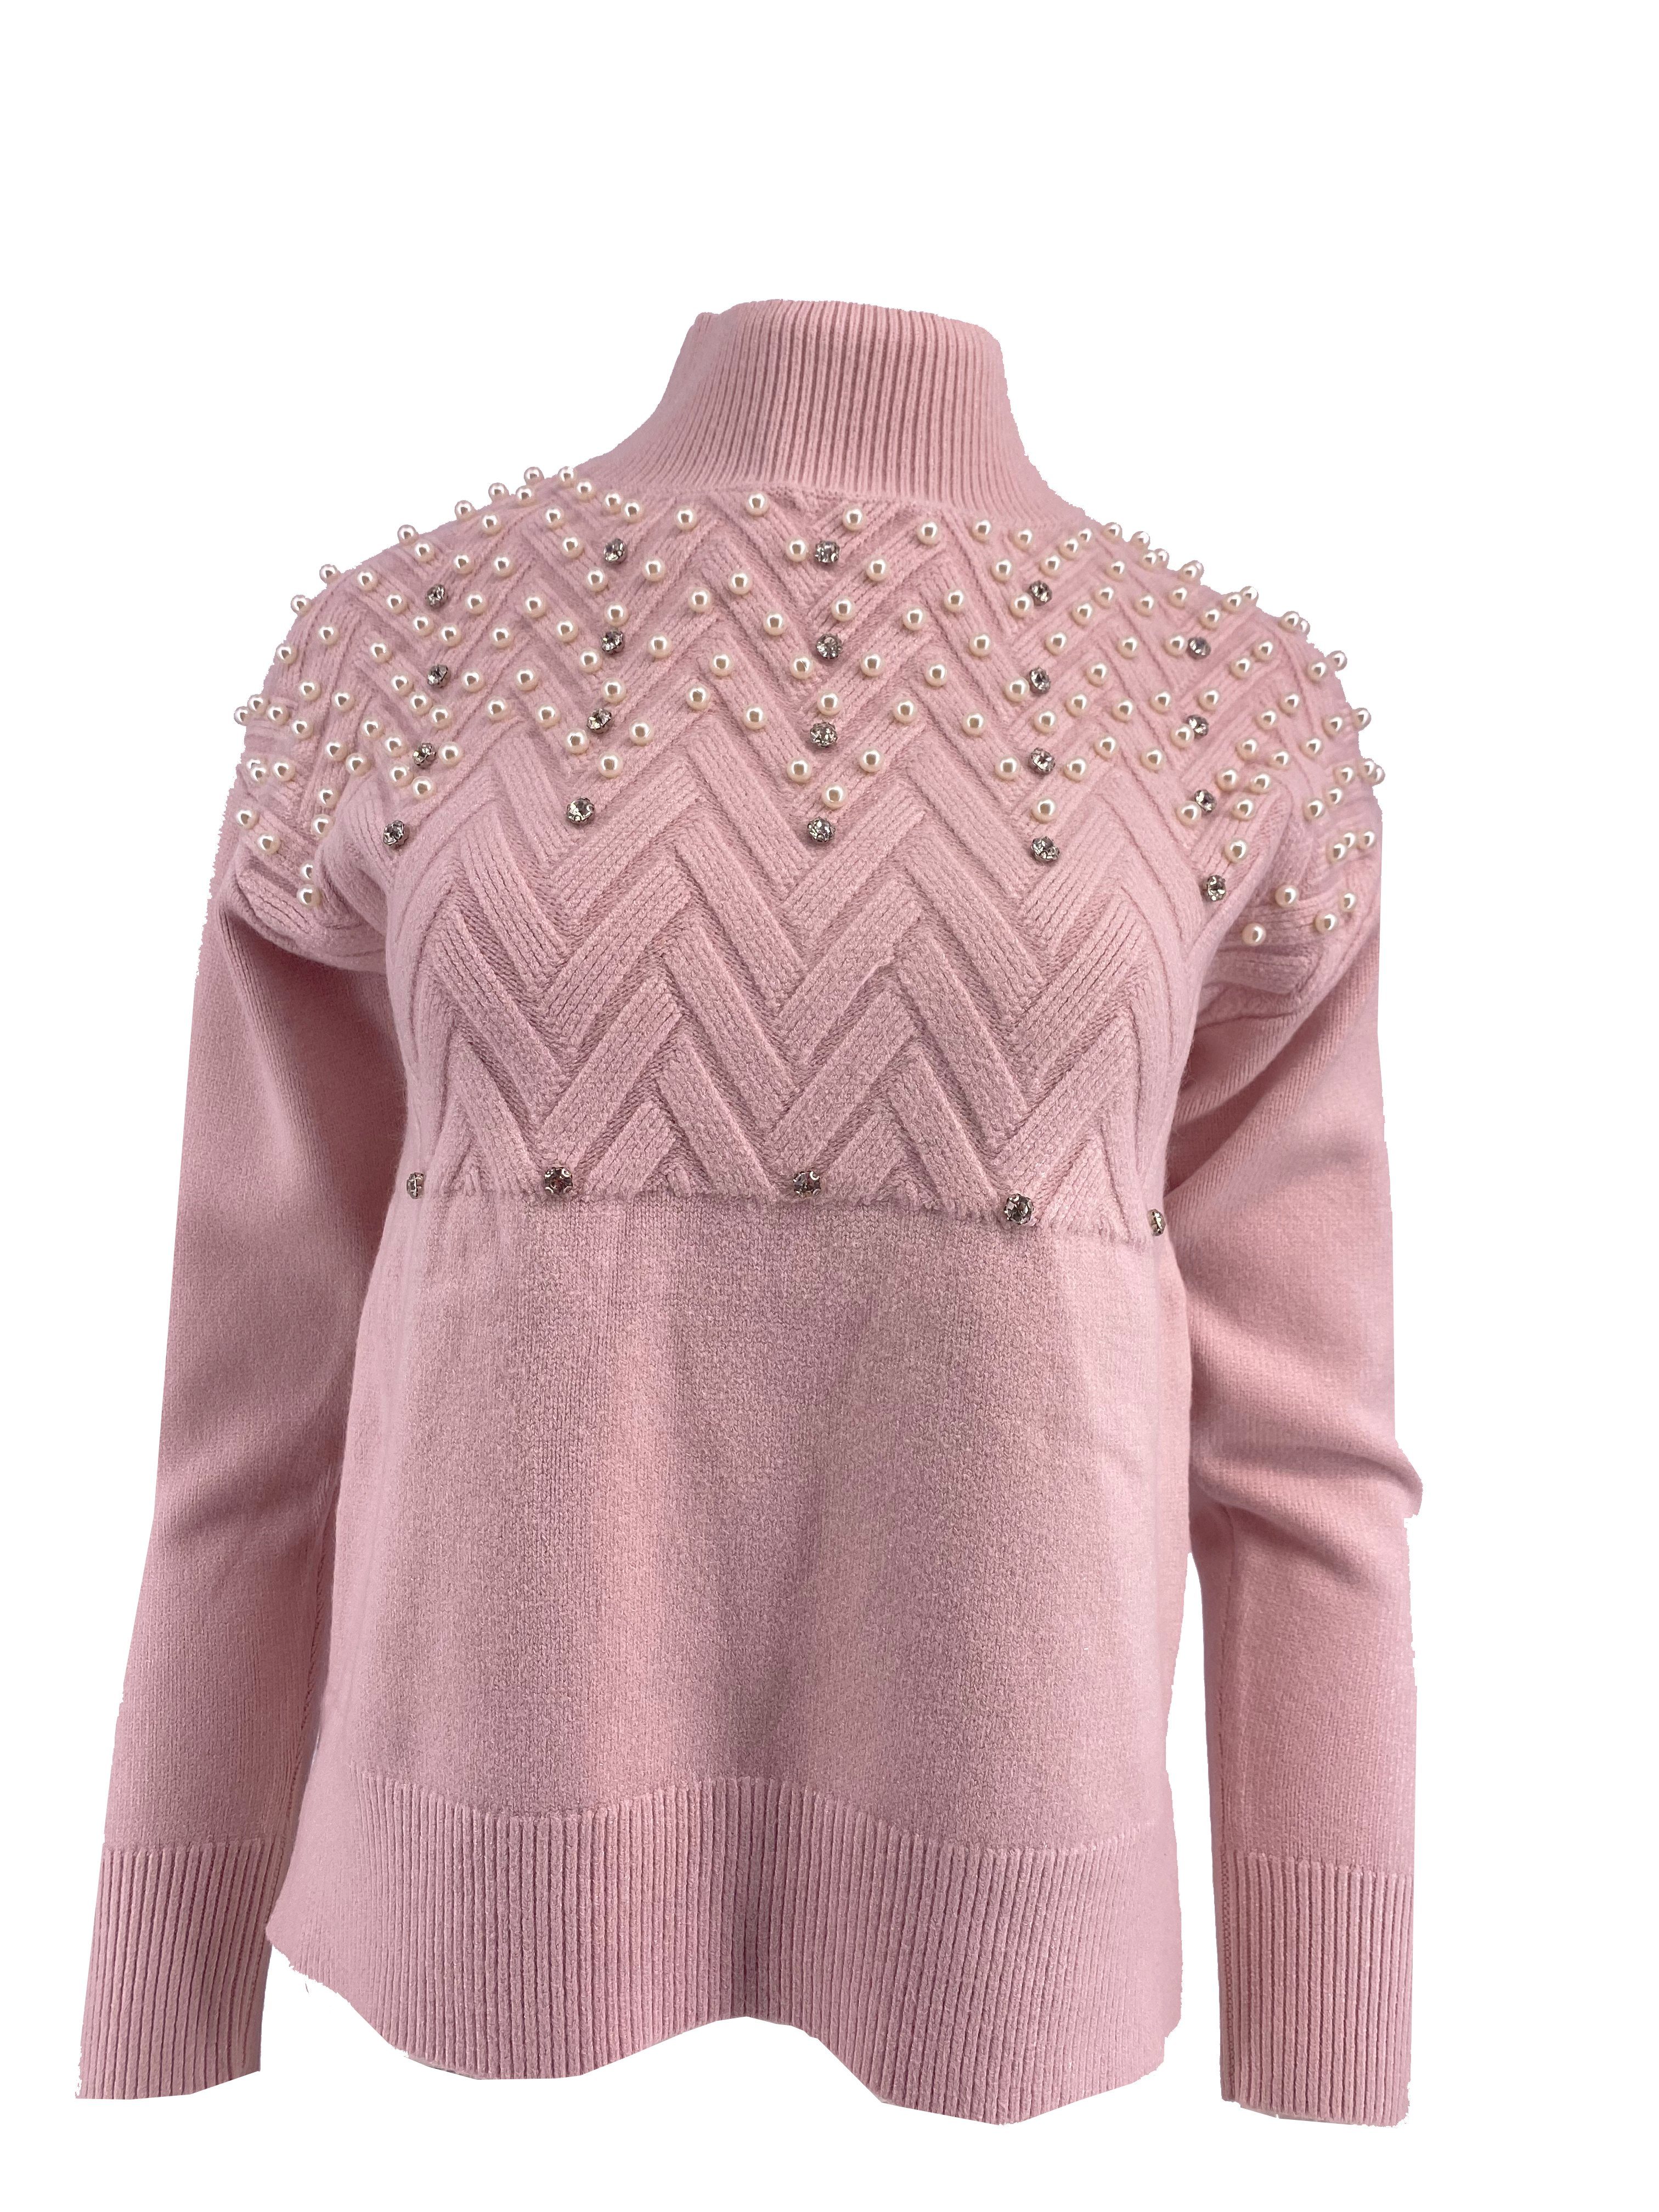 Passioni Strickpullover Pullover im Vokuhila-Stil mit Schmuck-Applikationen | Strickpullover